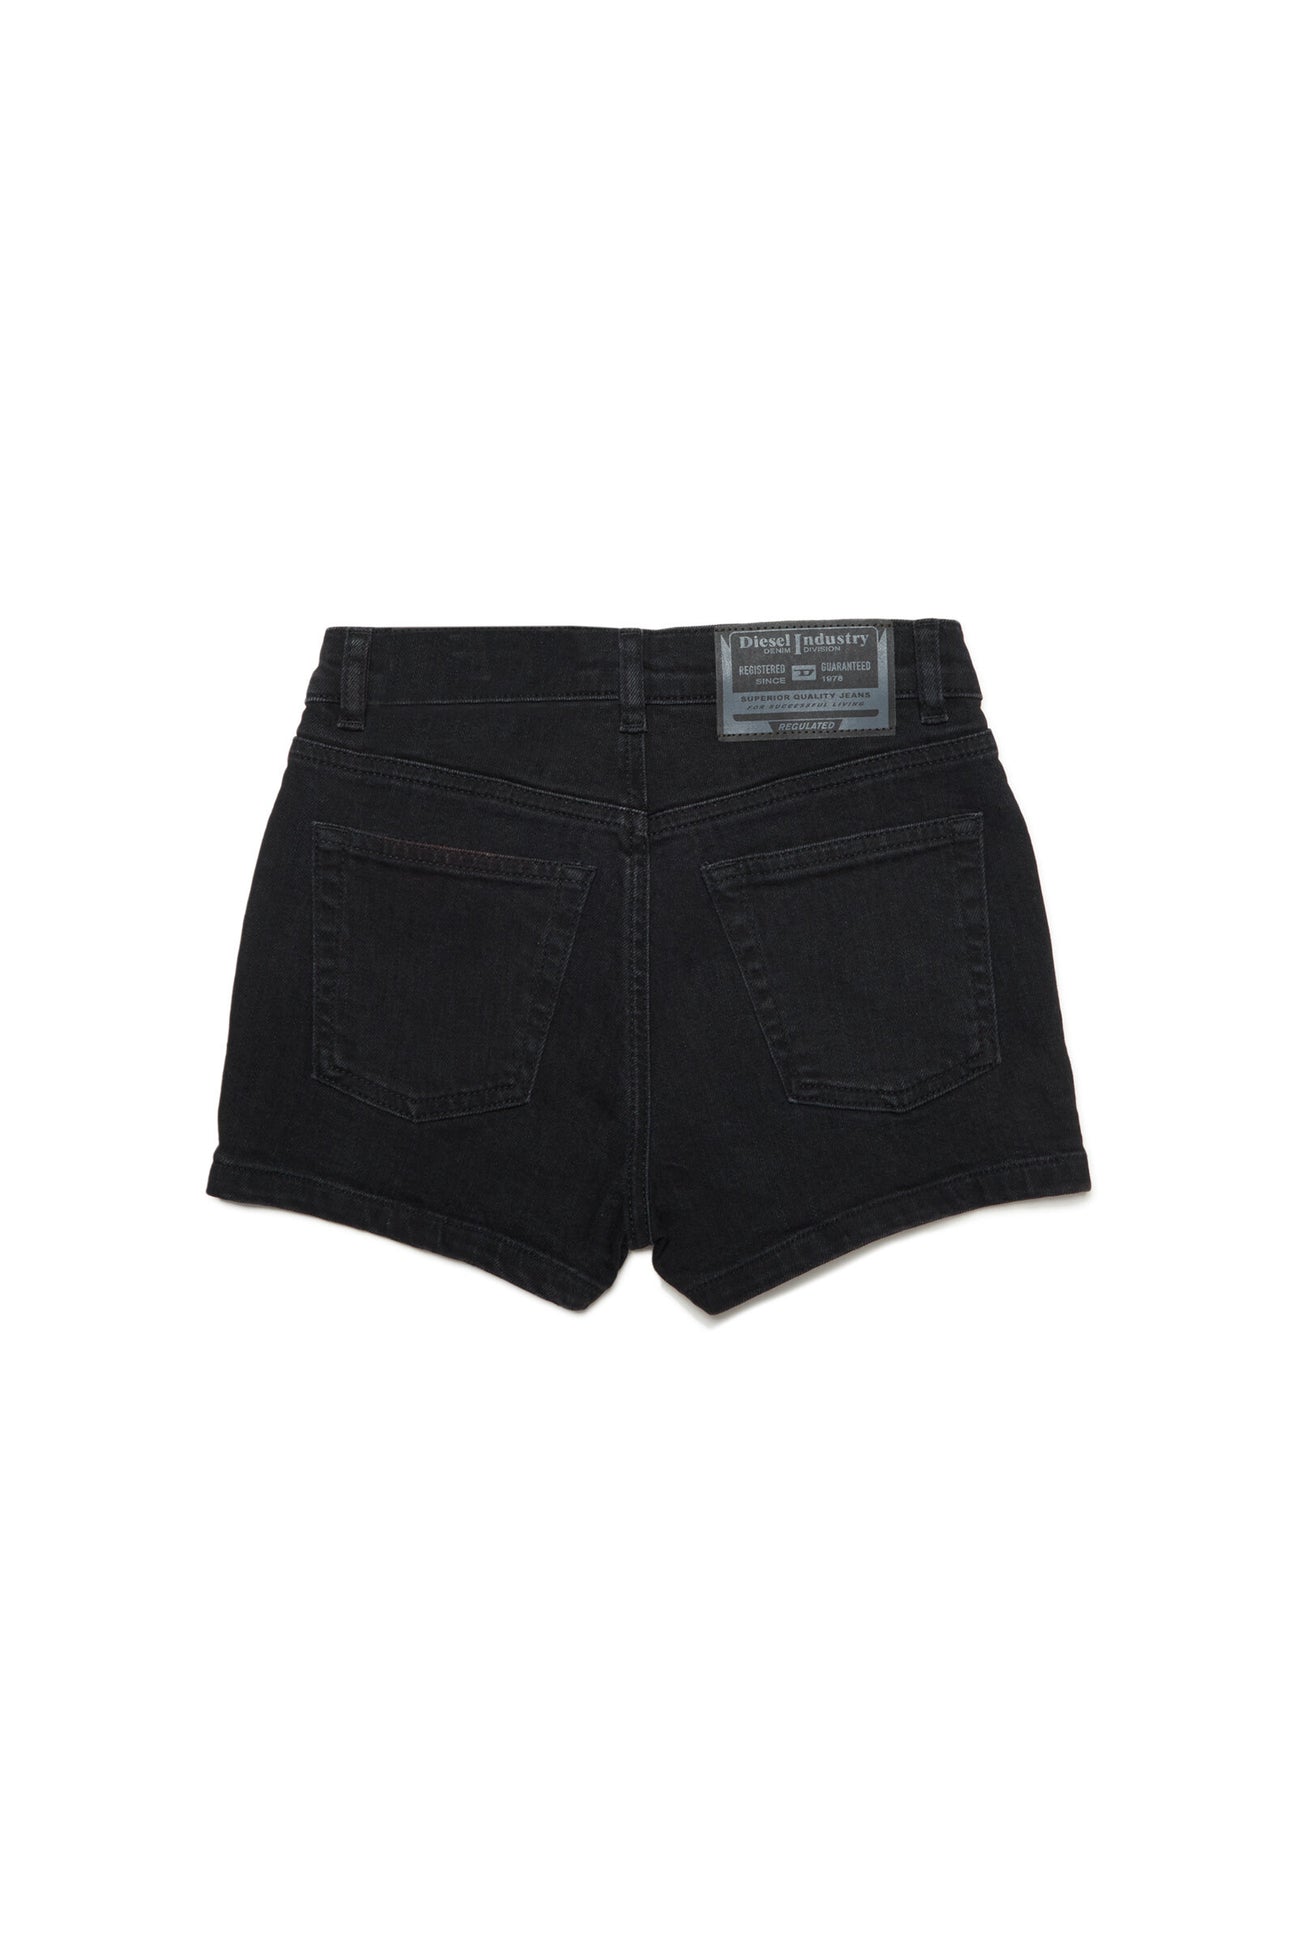 Shorts in denim nero modello 5 pockets Shorts in denim nero modello 5 pockets